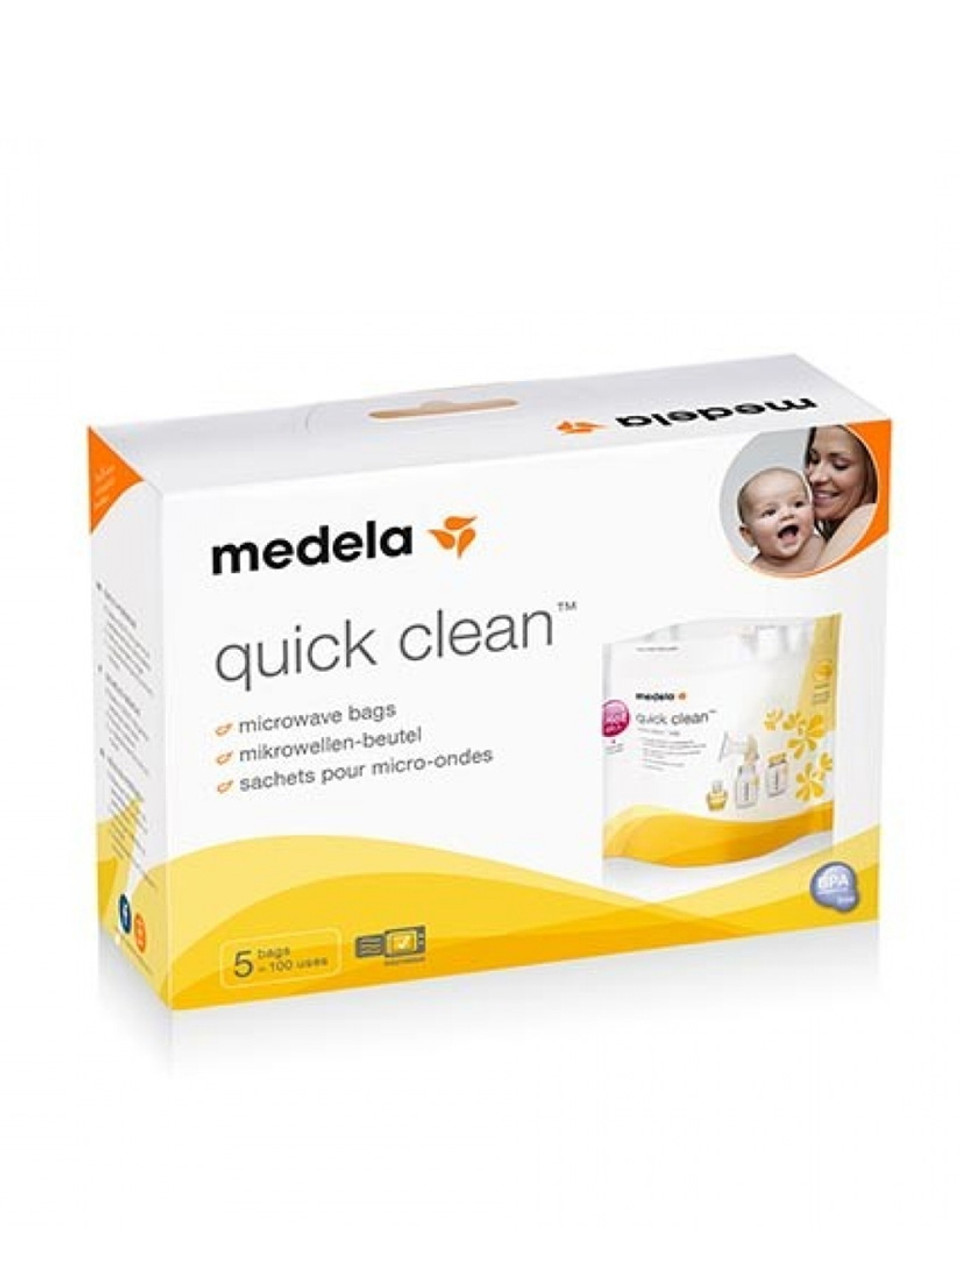 medela Quick Clean Micro-Steam Sterilizer Bags x5 Instructions